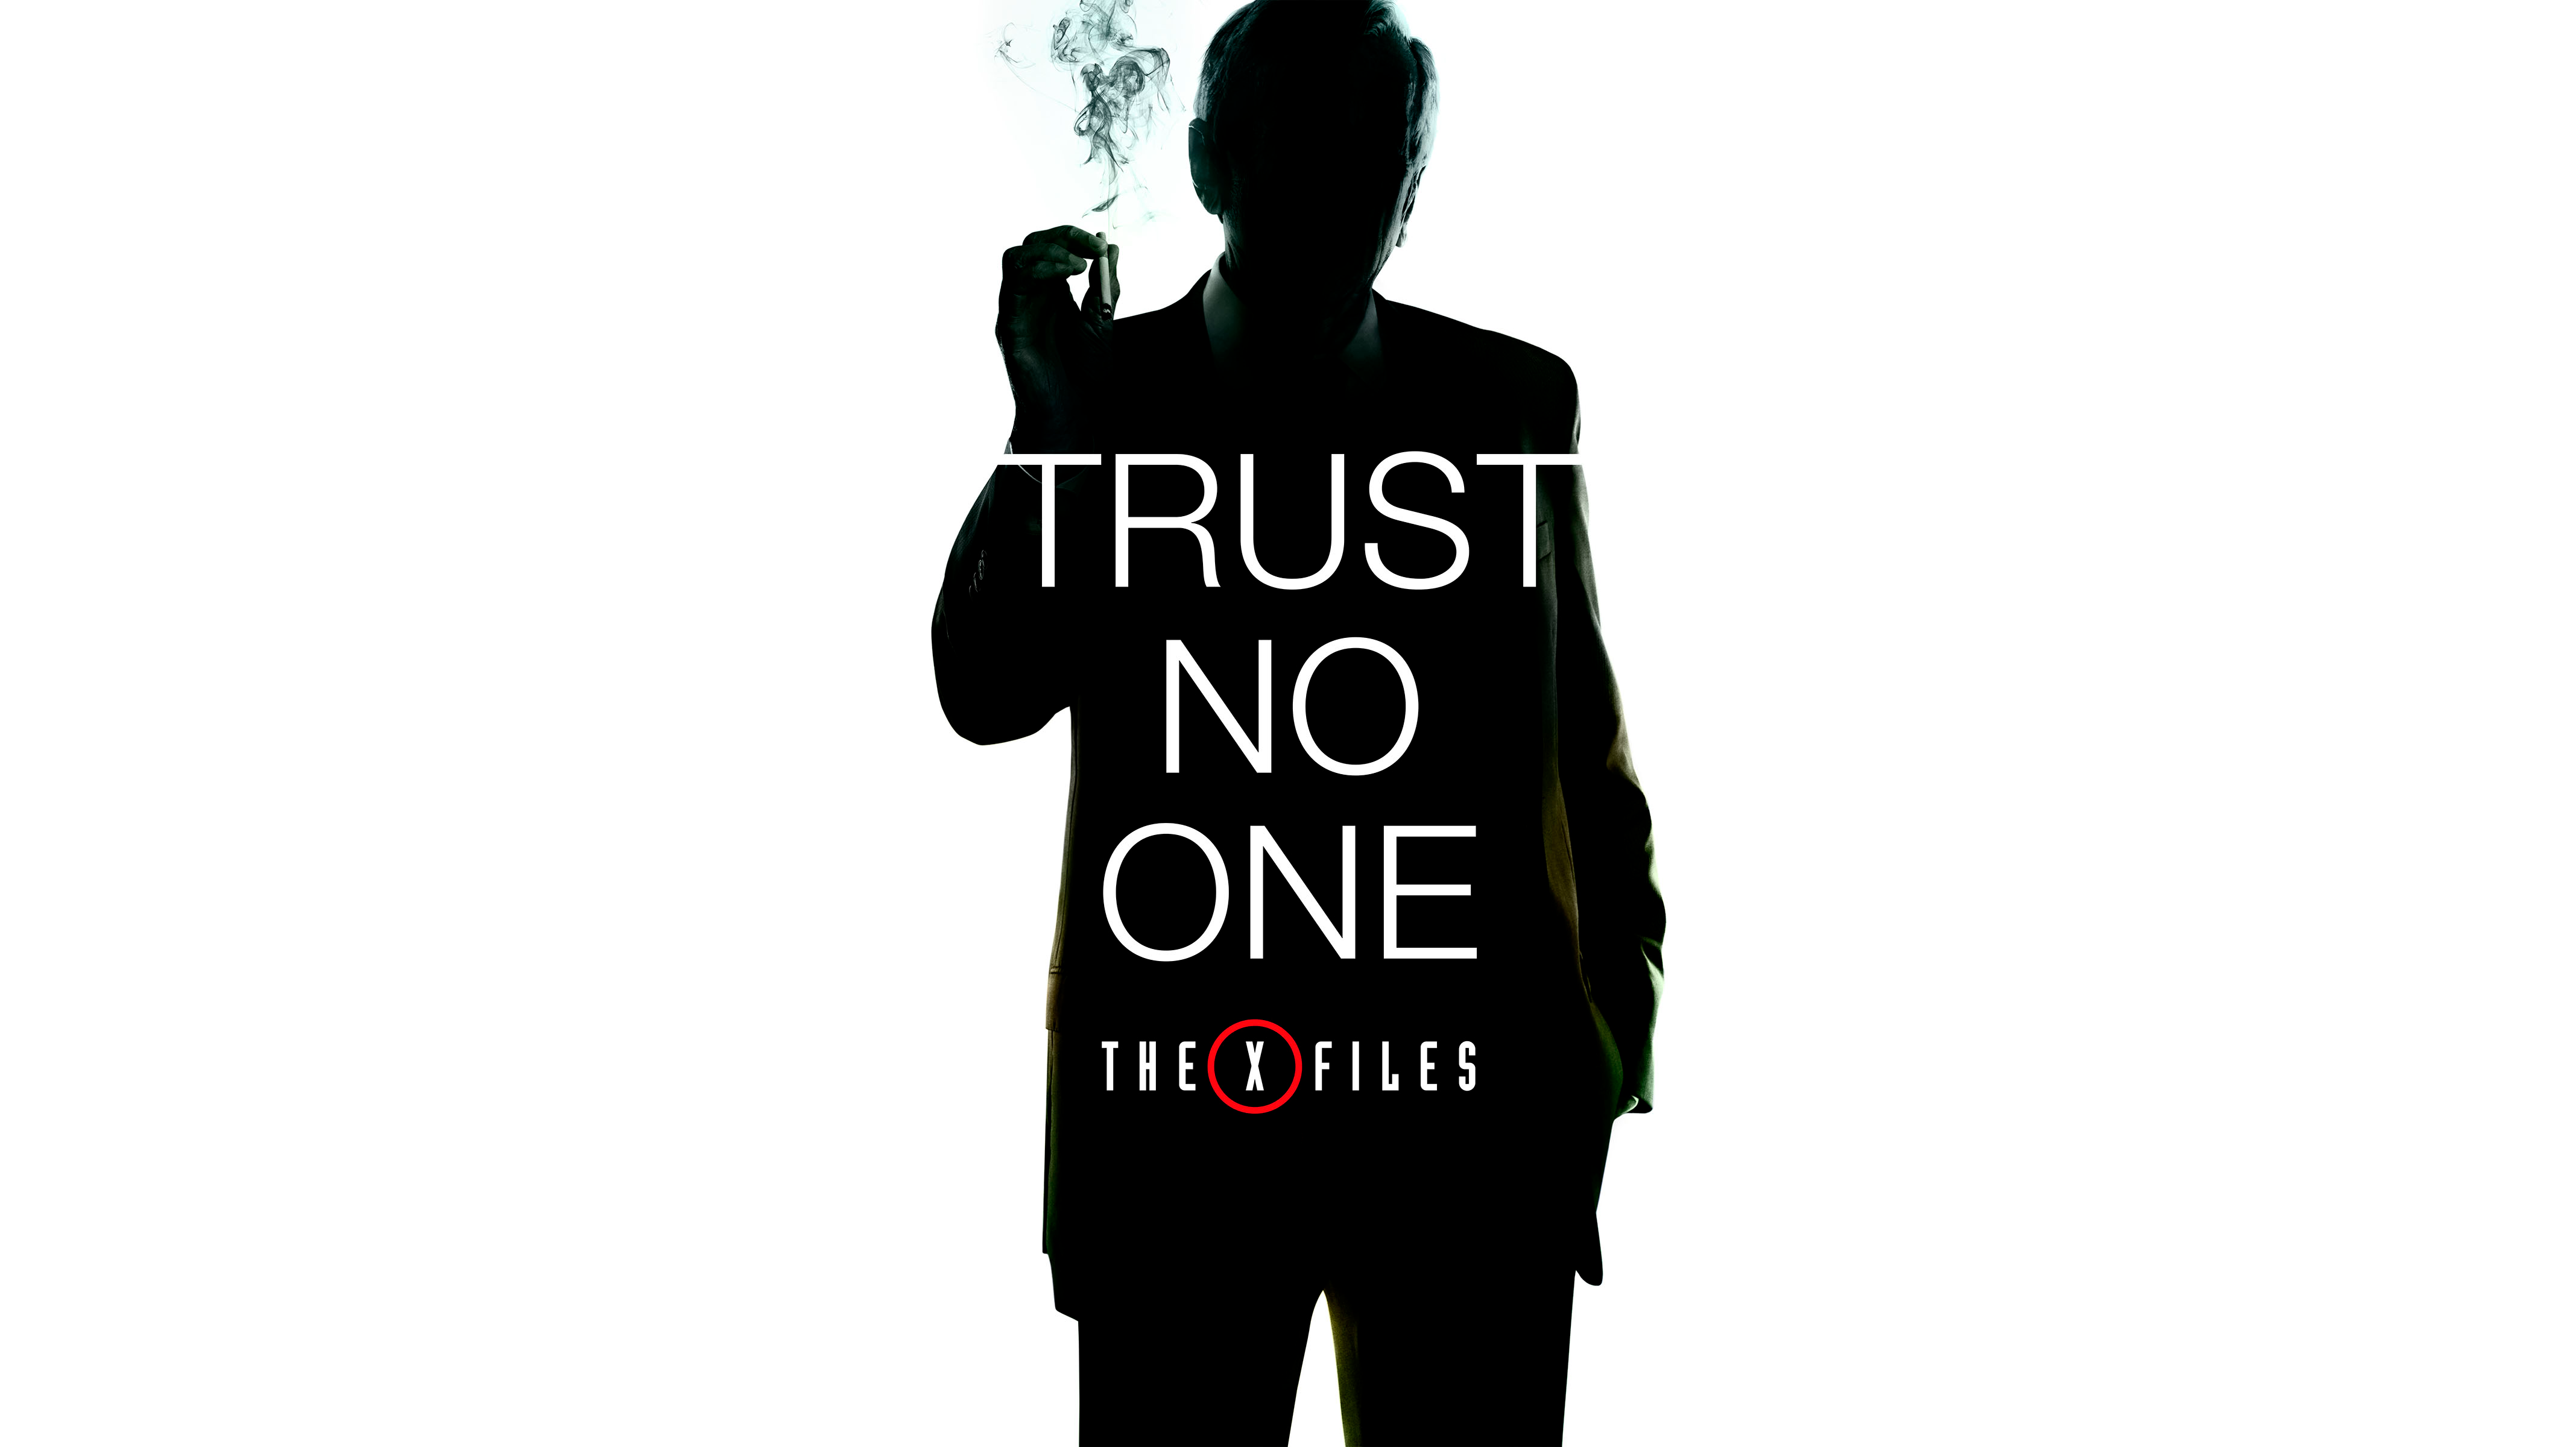 One s hopes. Trust no one секретные материалы. Плакат секретные материалы Trust no one. Секретные материалы обои на рабочий стол 1920х1080. Trust no one x files.